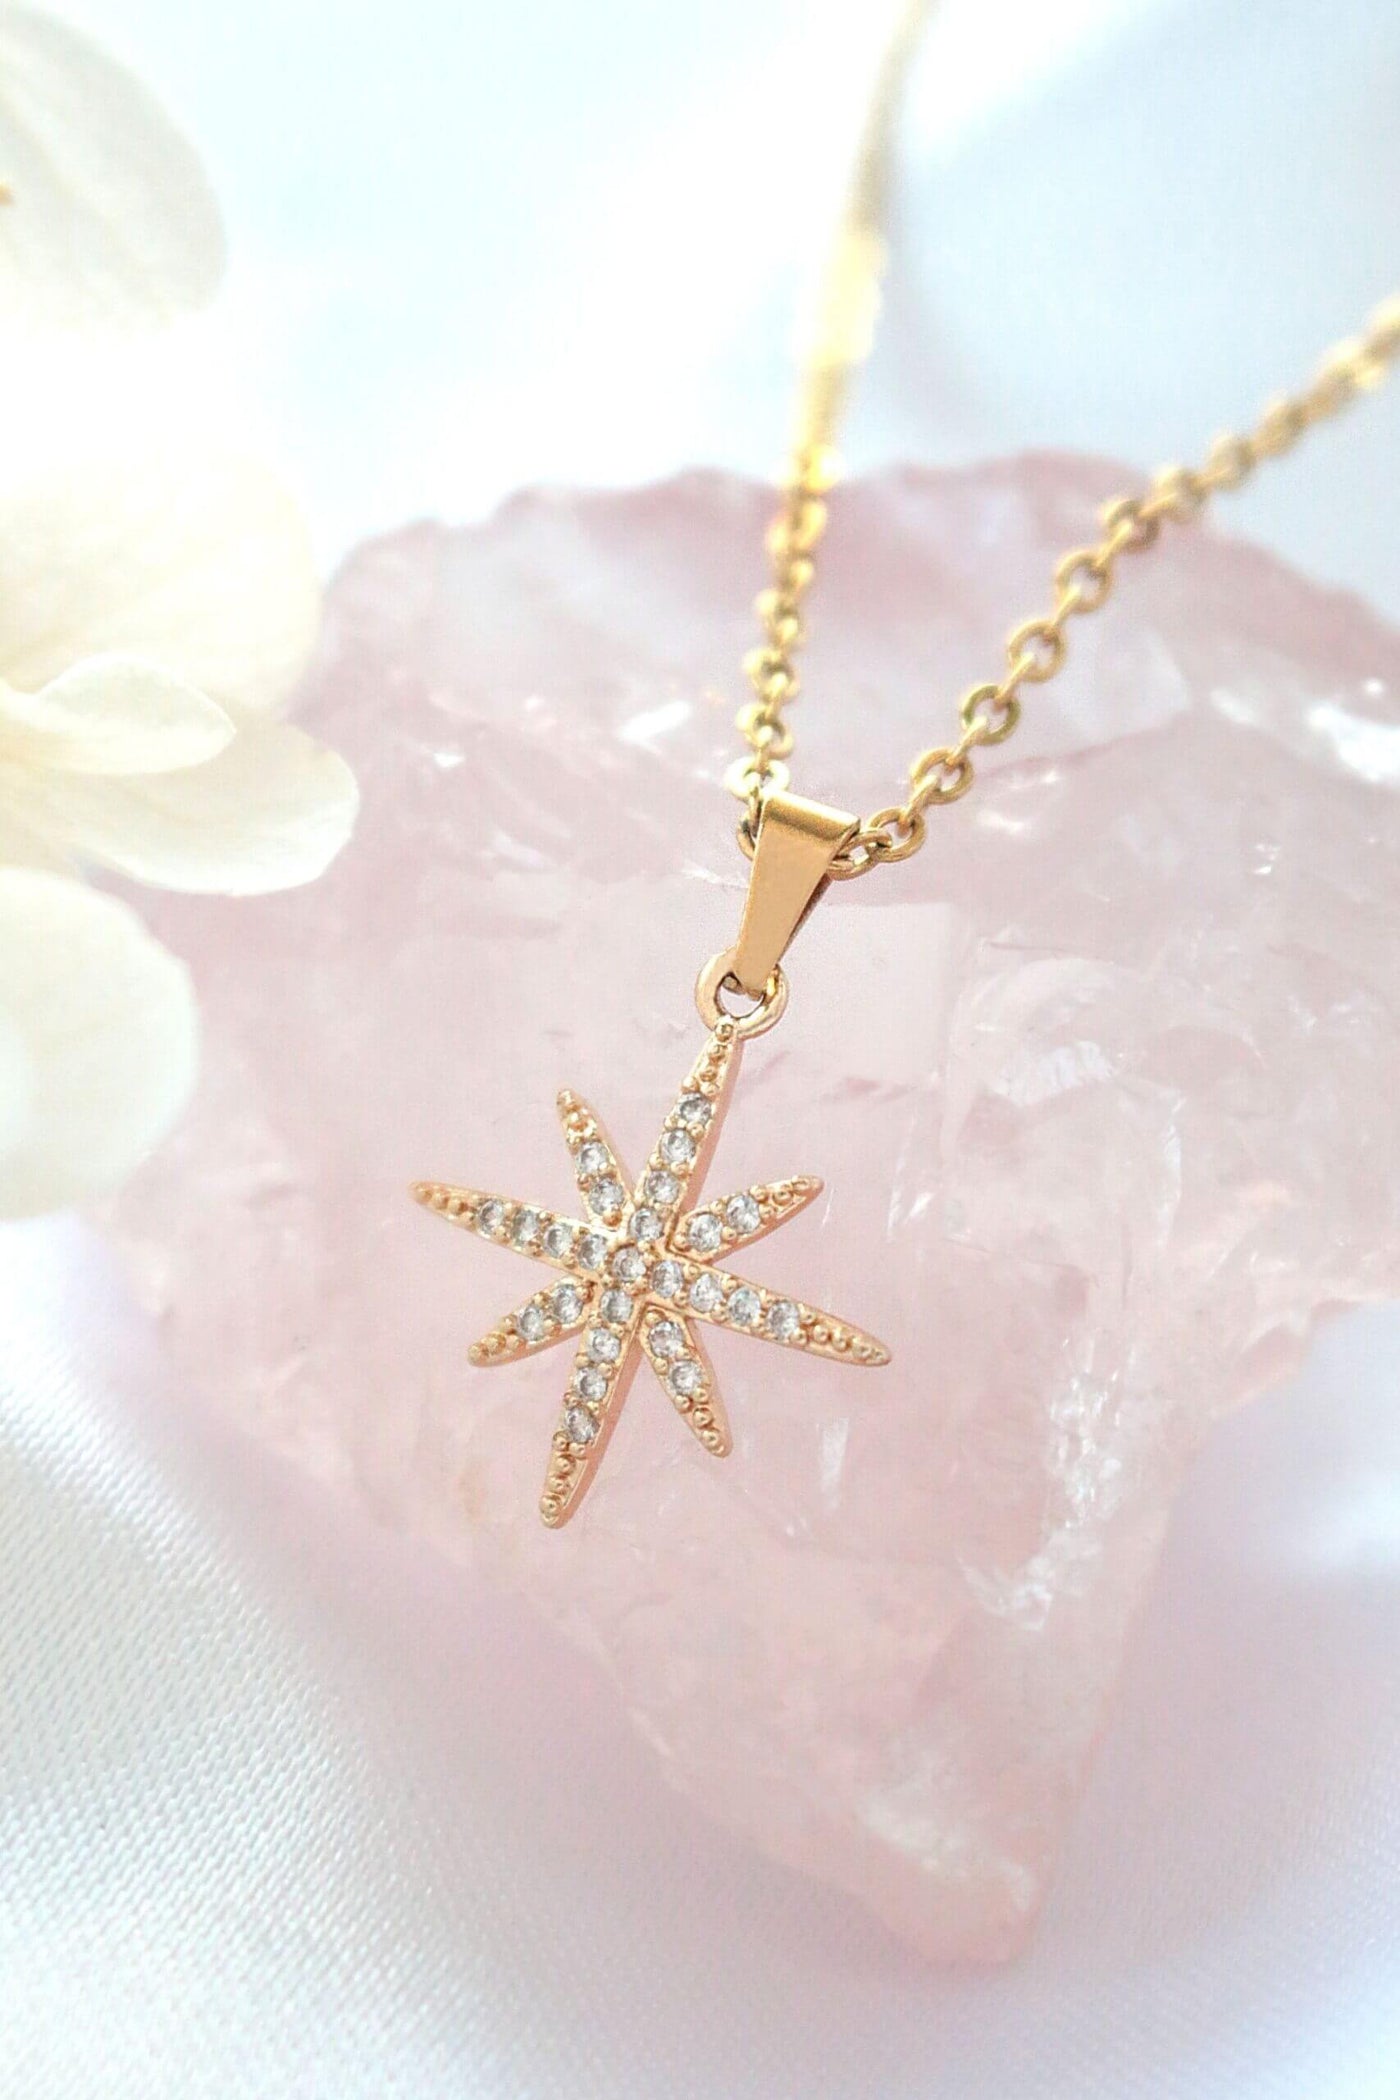 Polar star necklace 24 carat gold plated